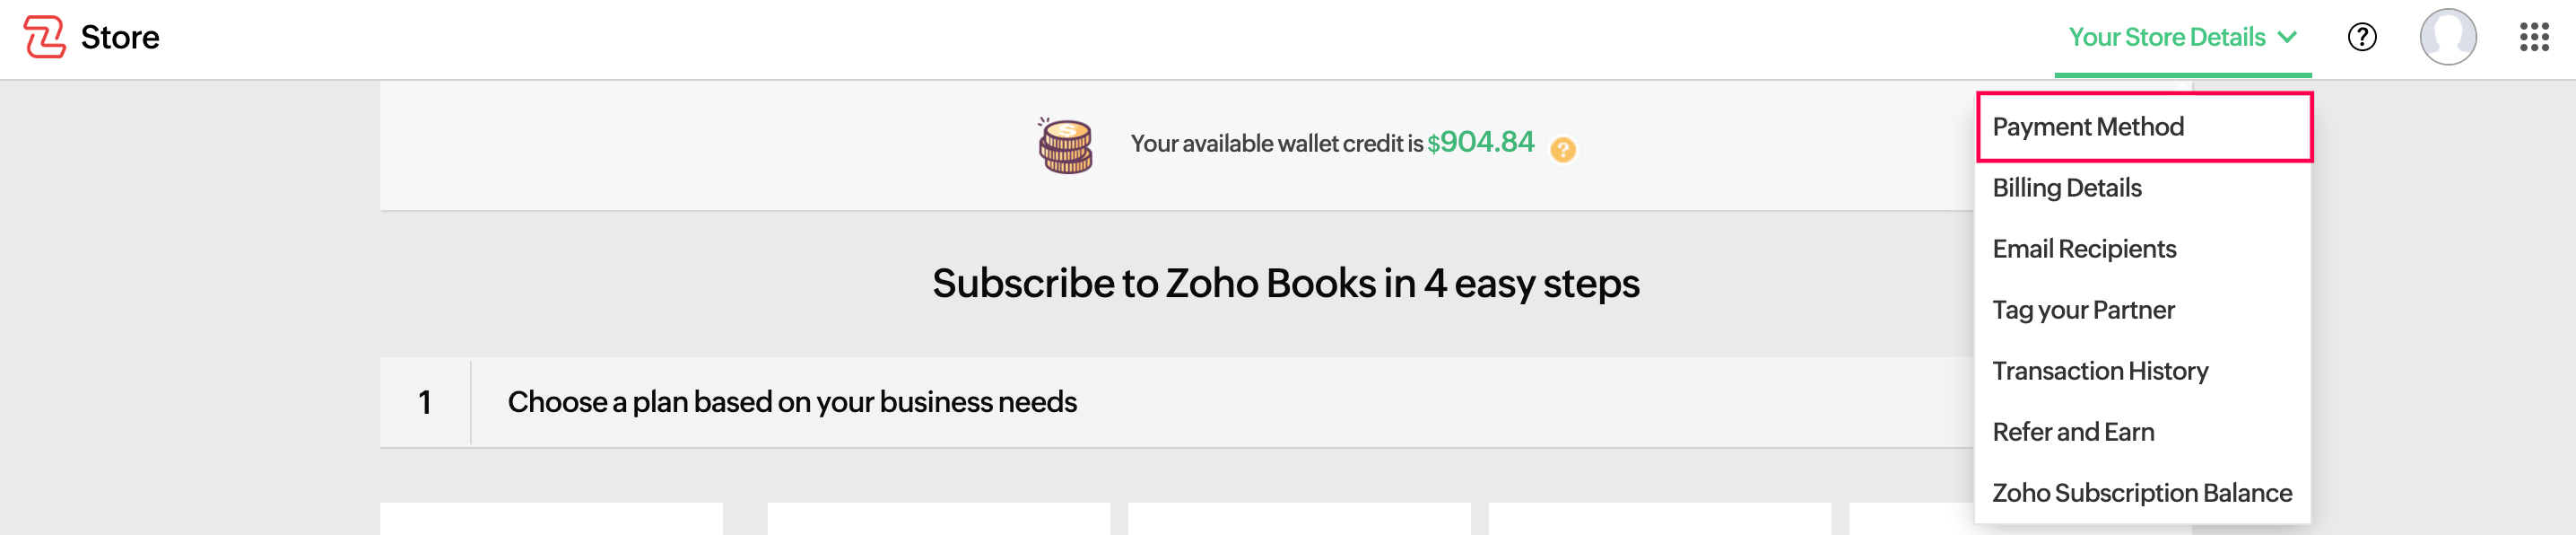 Update Card Address Details Help Zoho Books